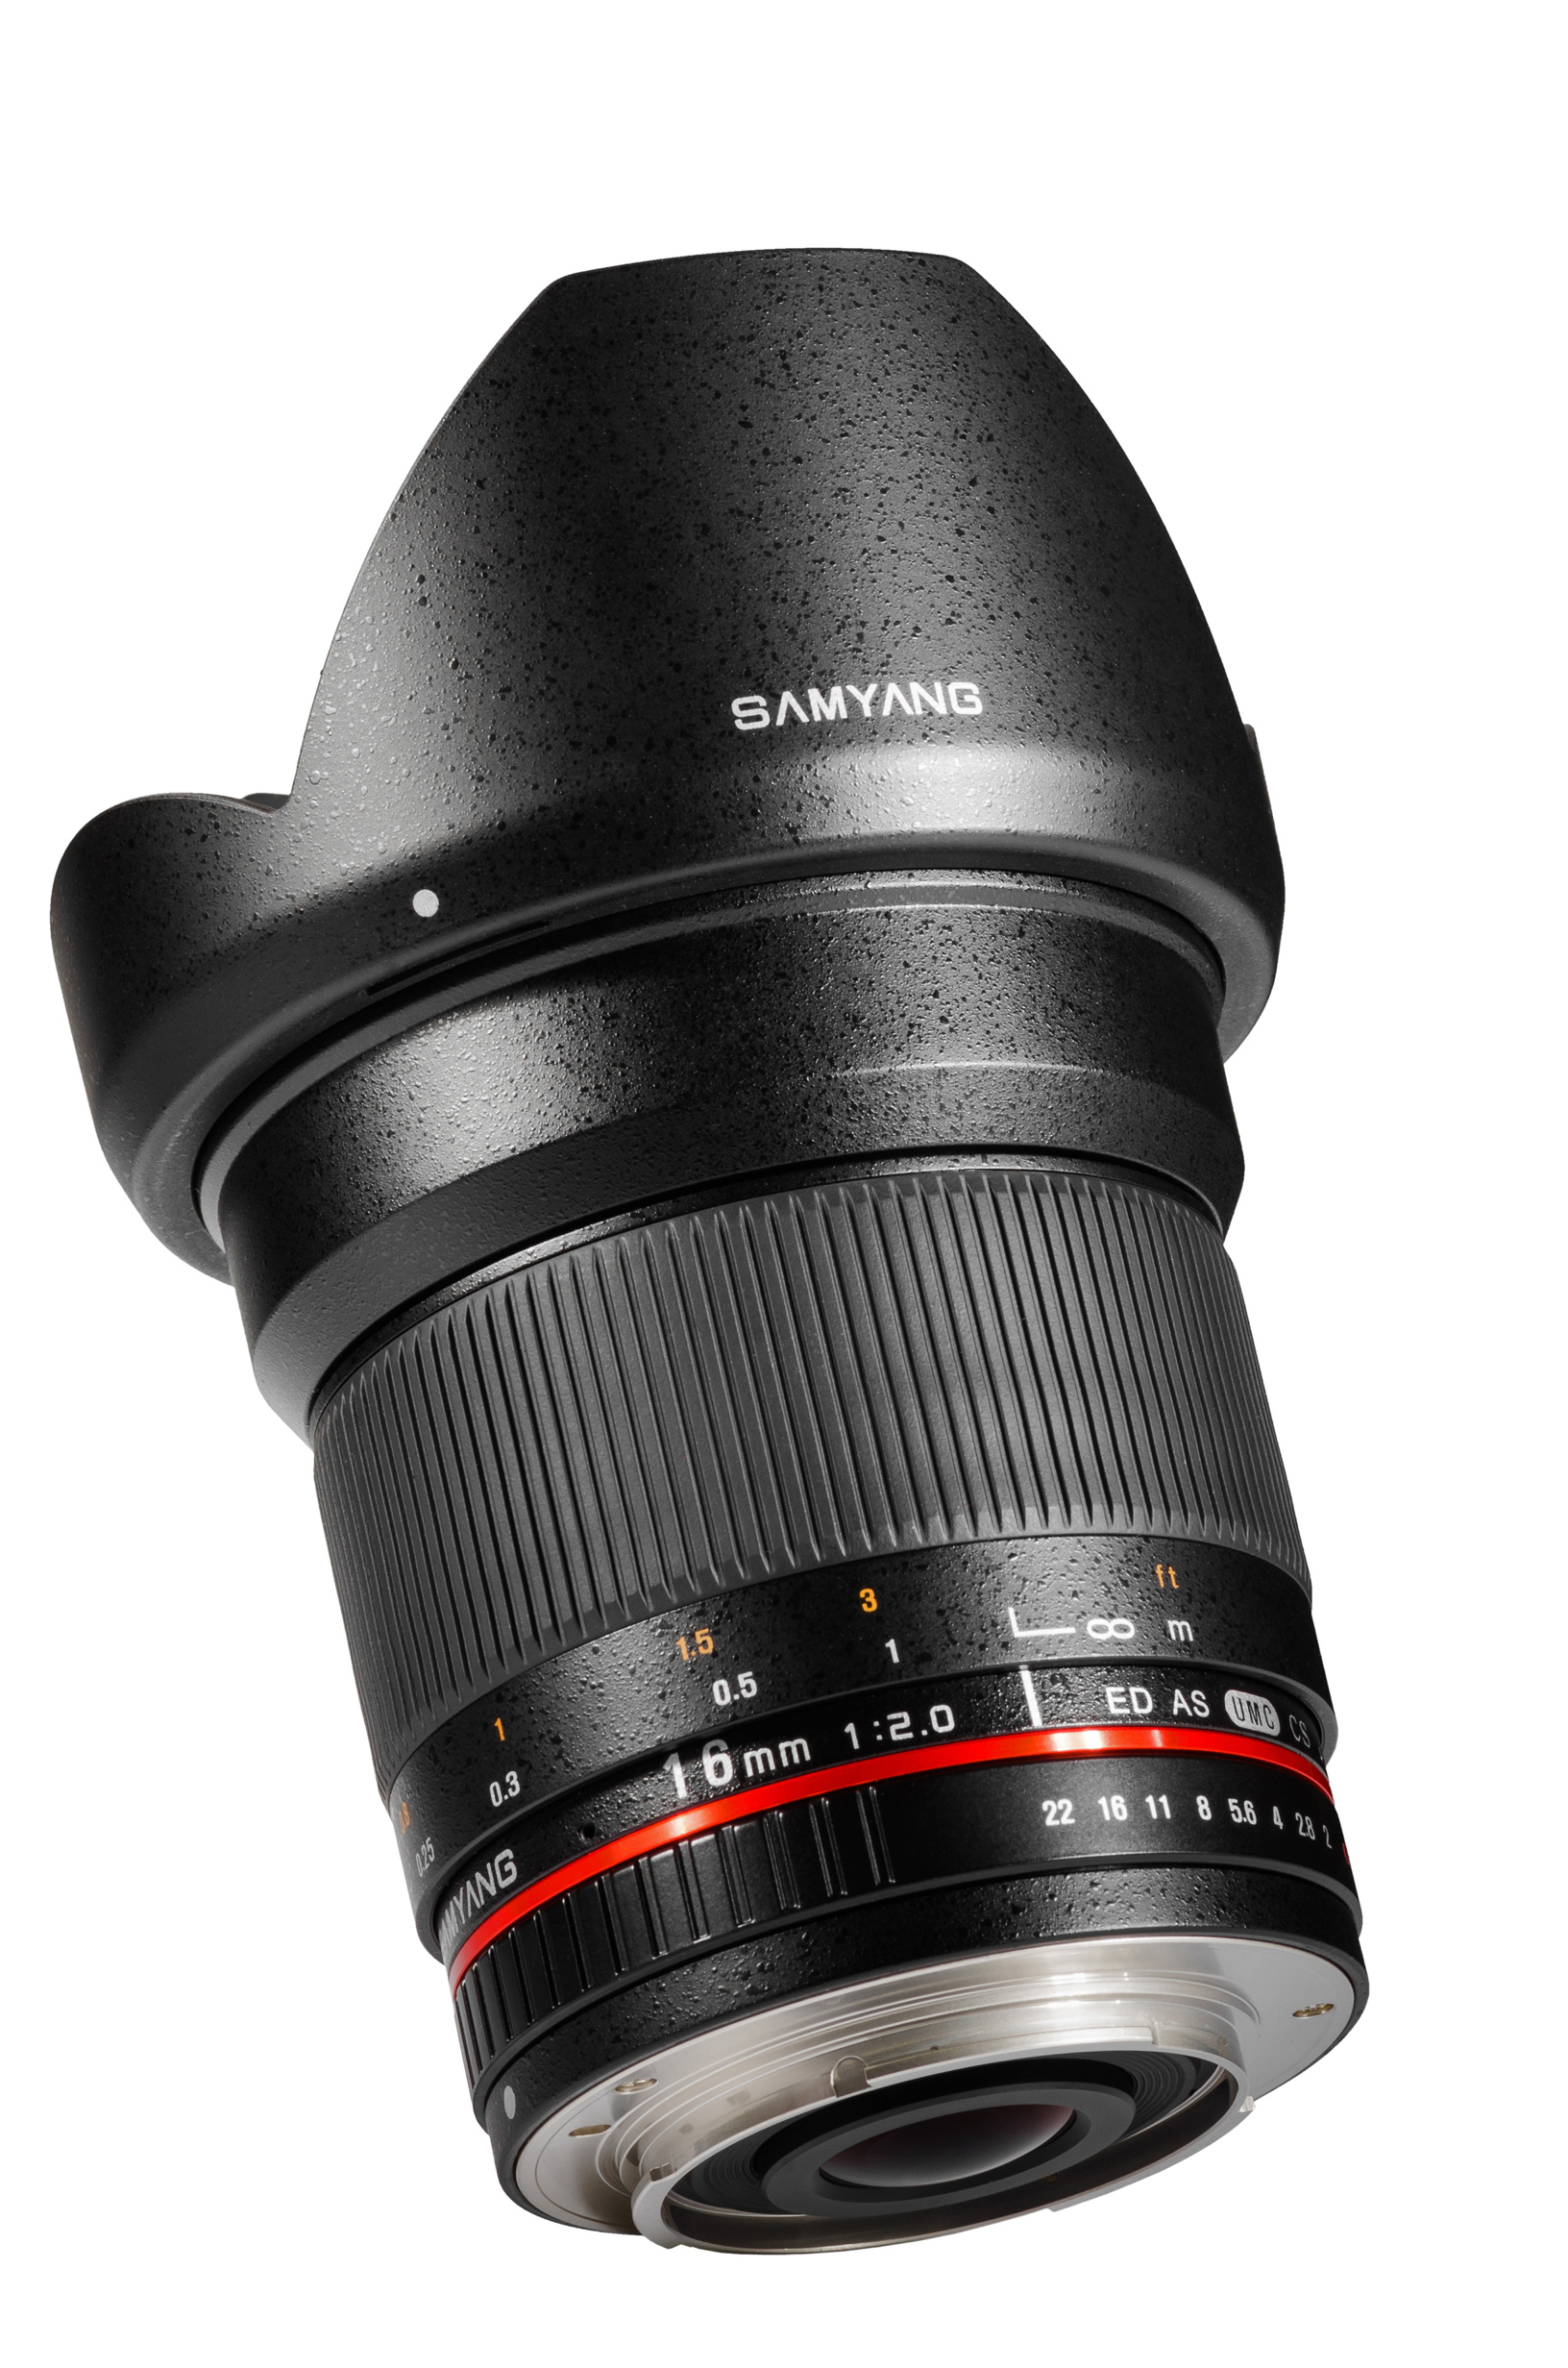 Samyang 16mm f/2.0 Sony E